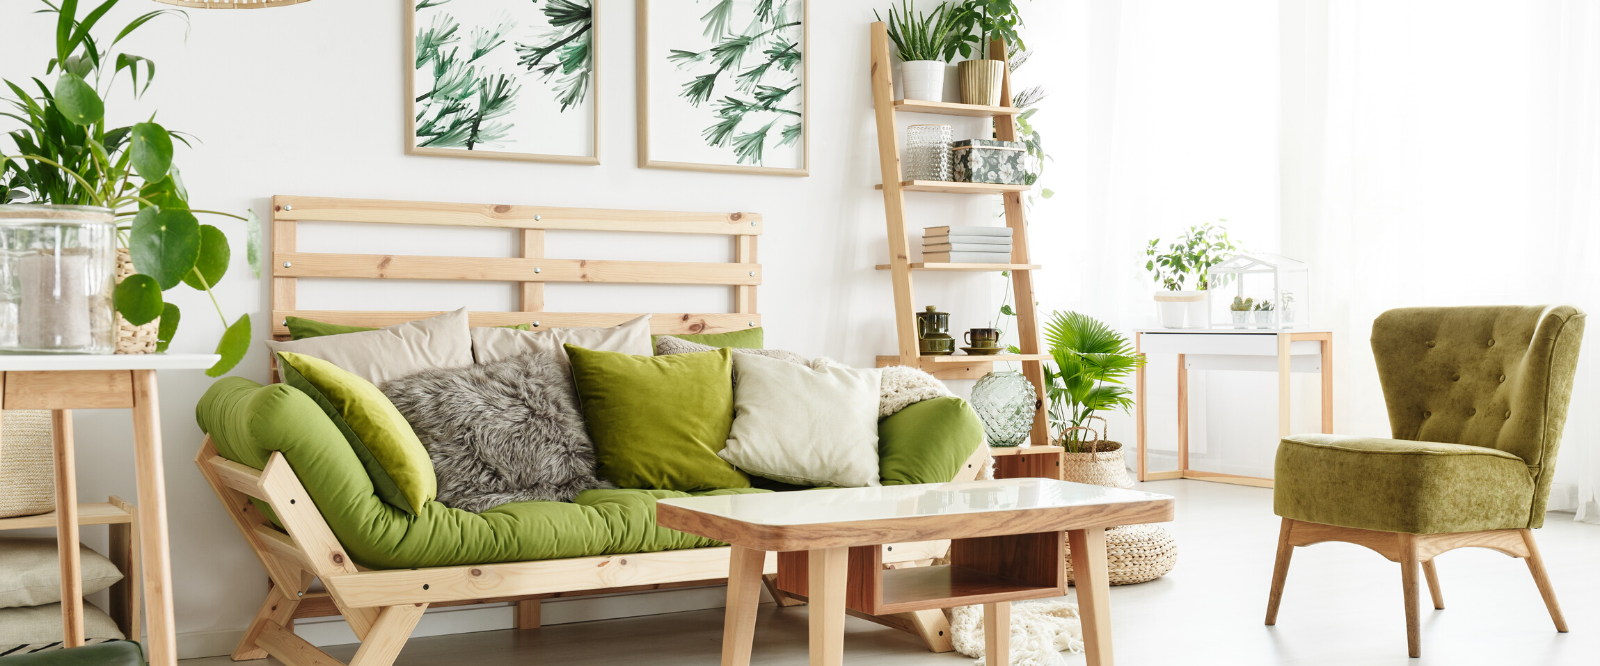 green natural lifestyle living room set up